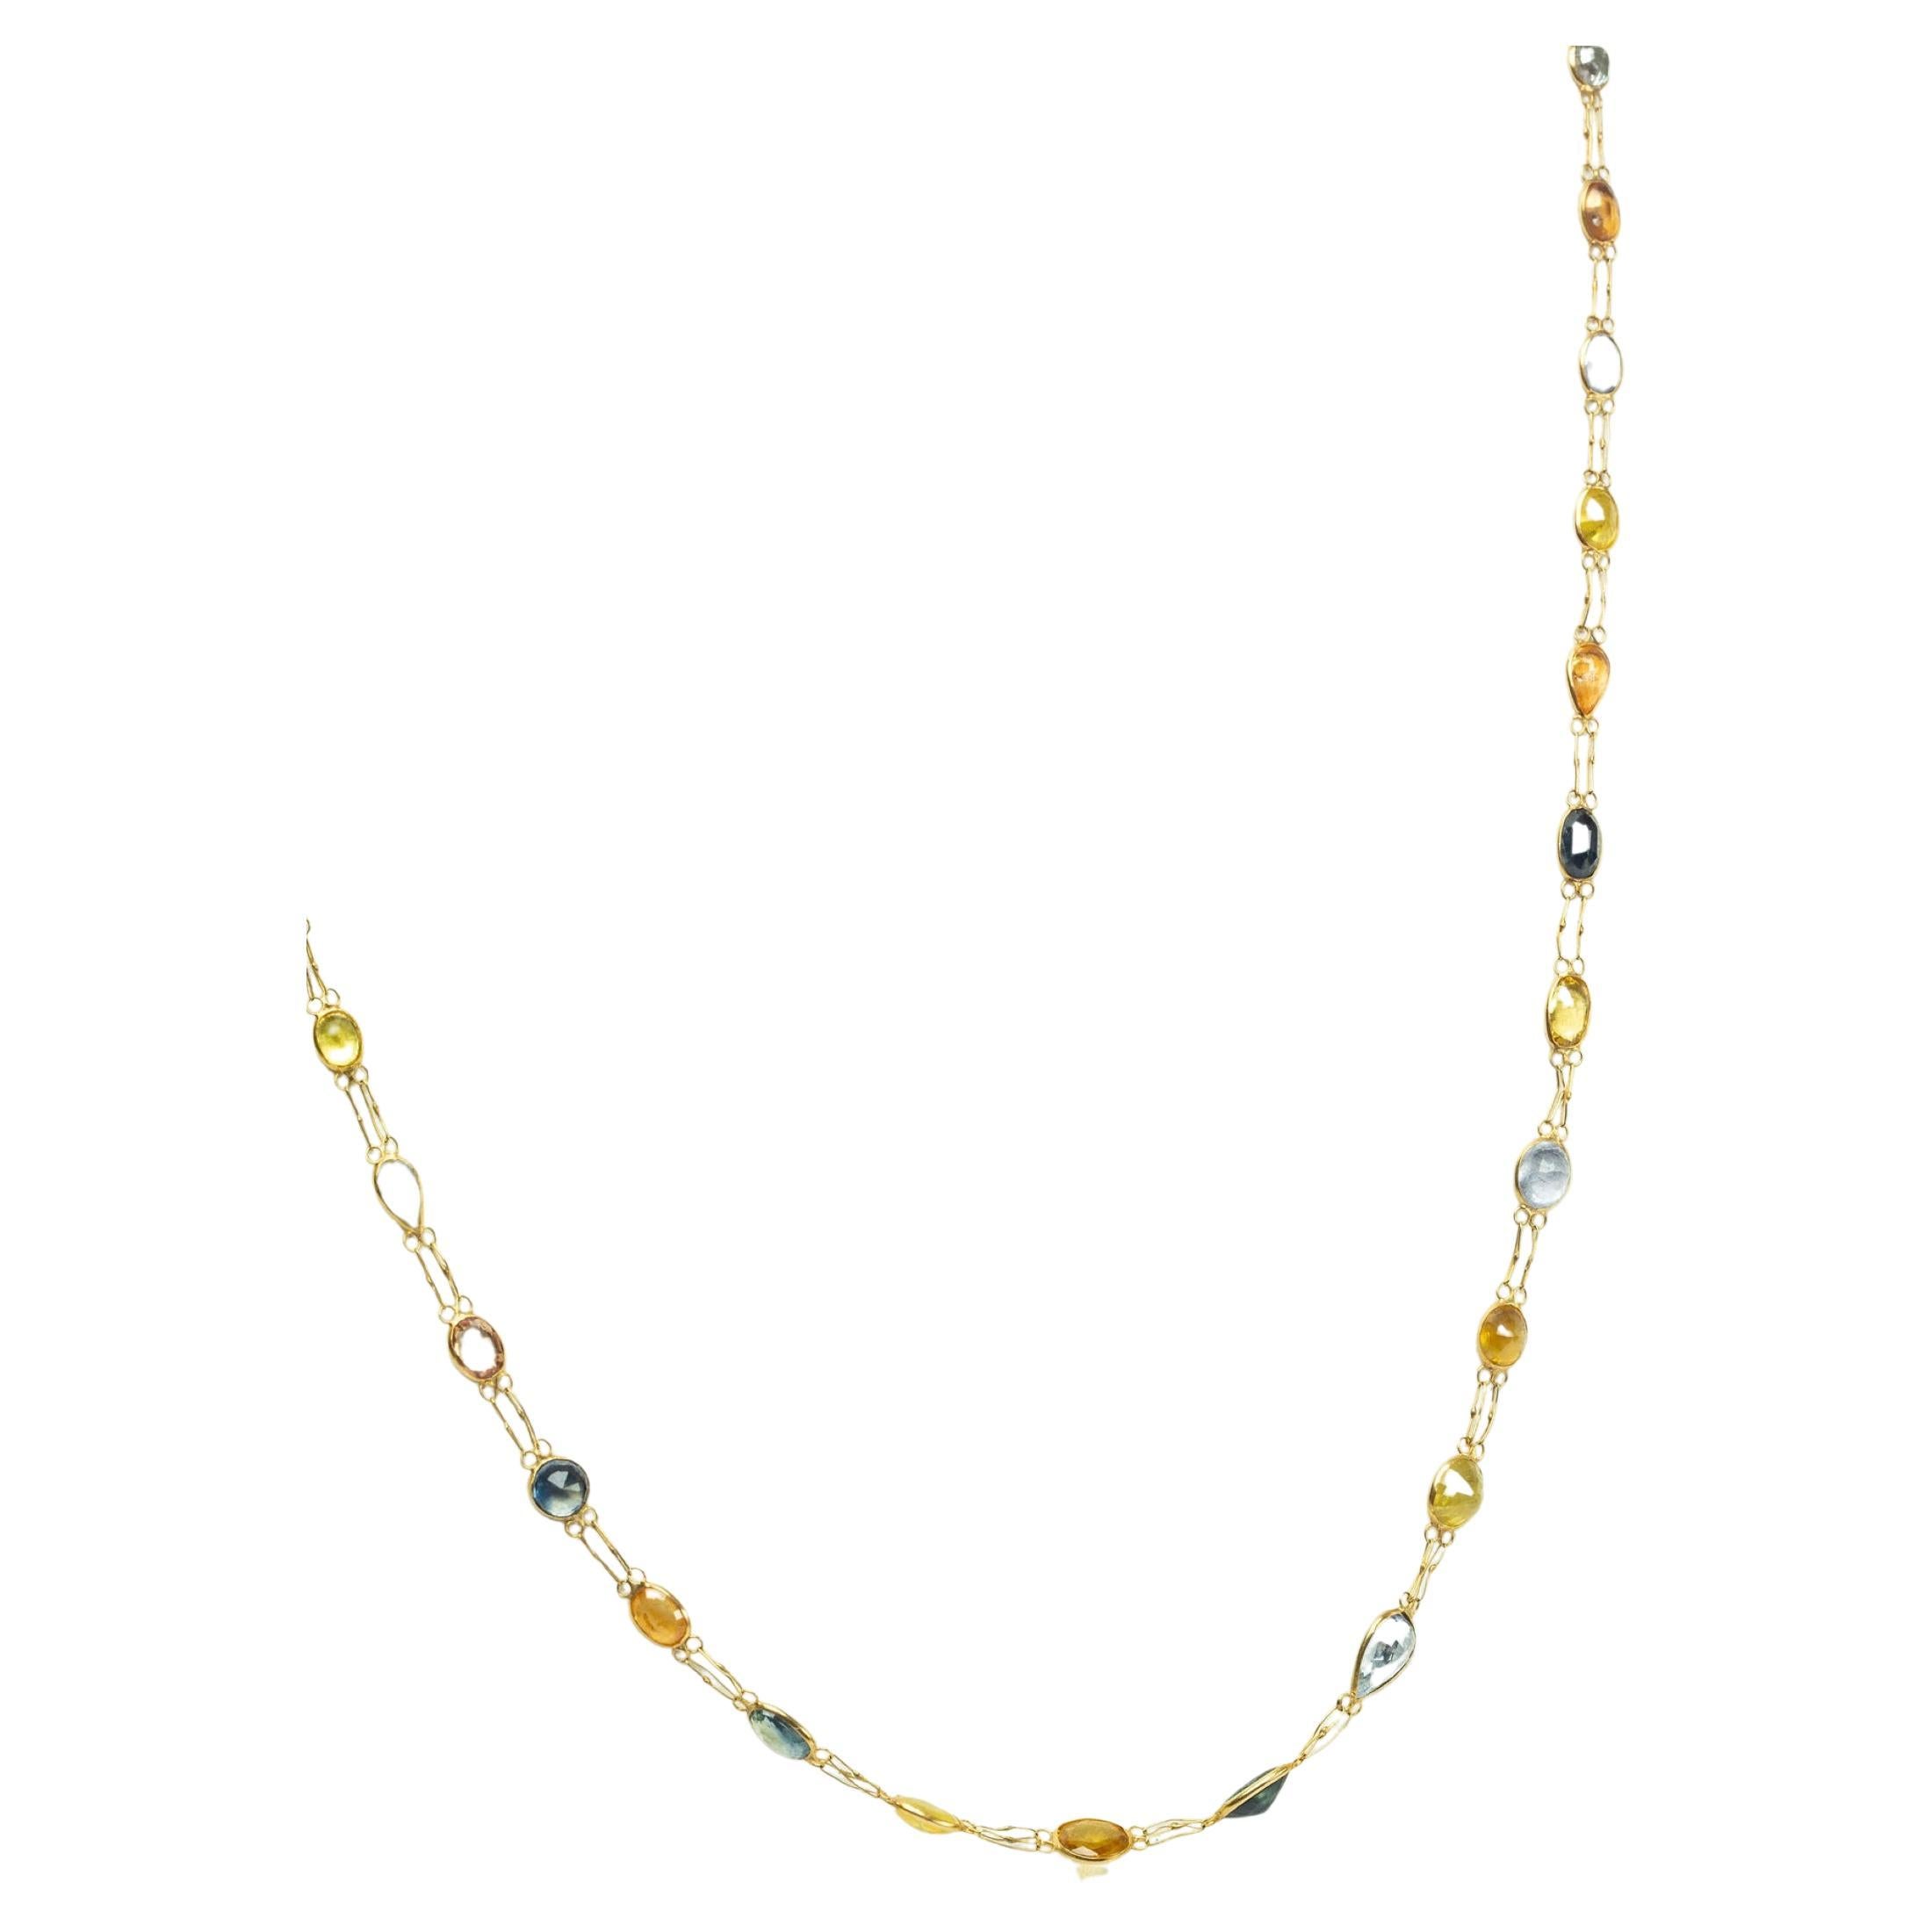 13ctw Multicolor Sapphire and Emerald 18k Gold Dainty Link Necklace (Collier à maillons délicats en or 18k)